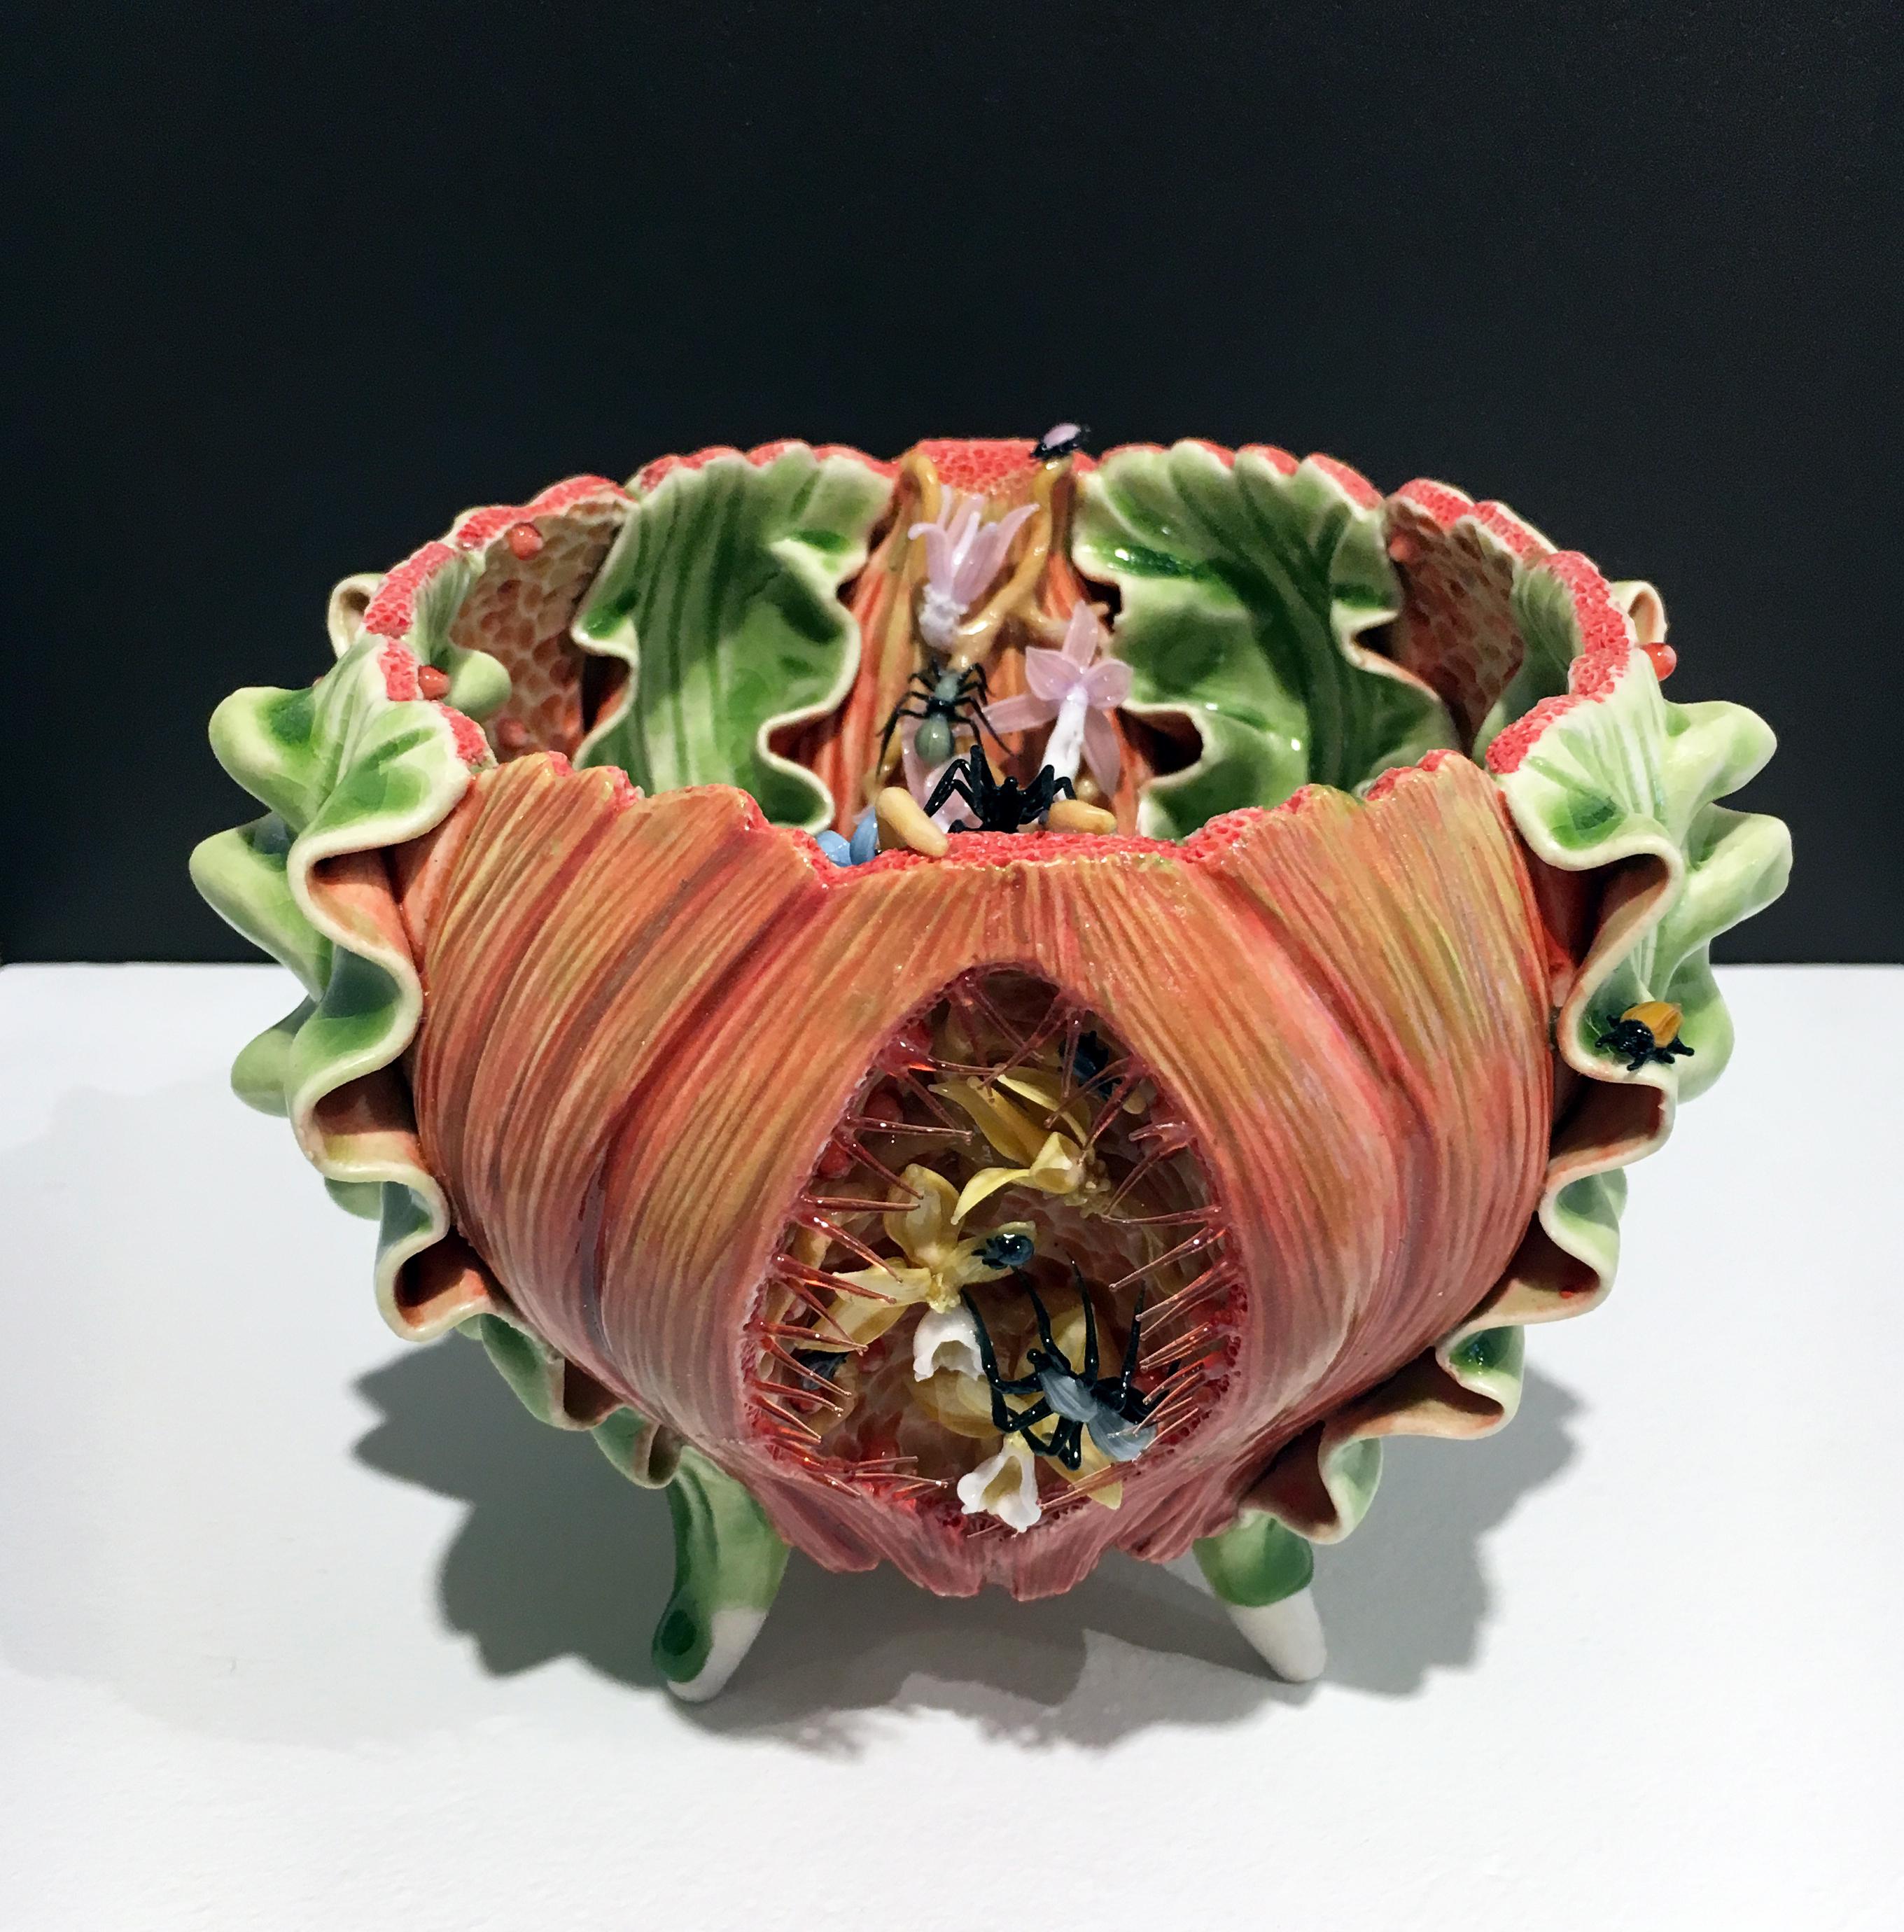 "Bowl", Porcelain Sculpture with Glass Detailing, Anatomical References, Glaze